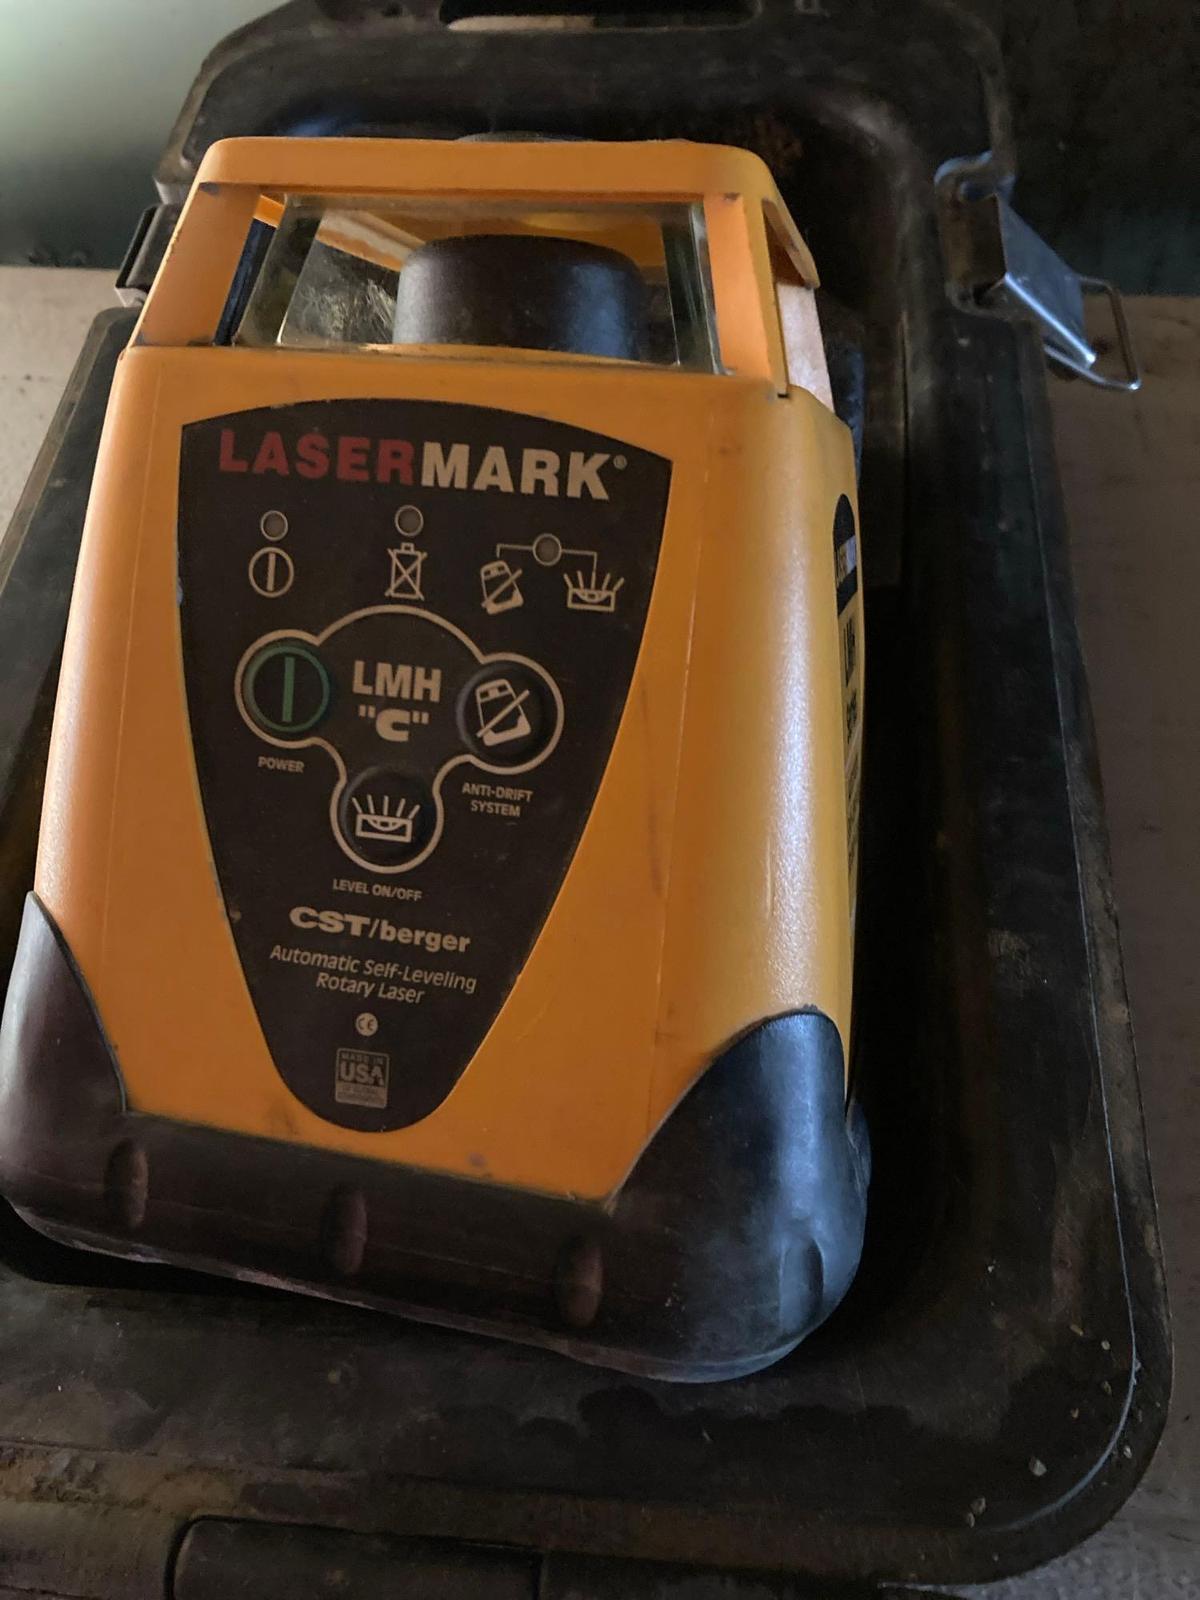 Laser Mark auto self level rotary laser